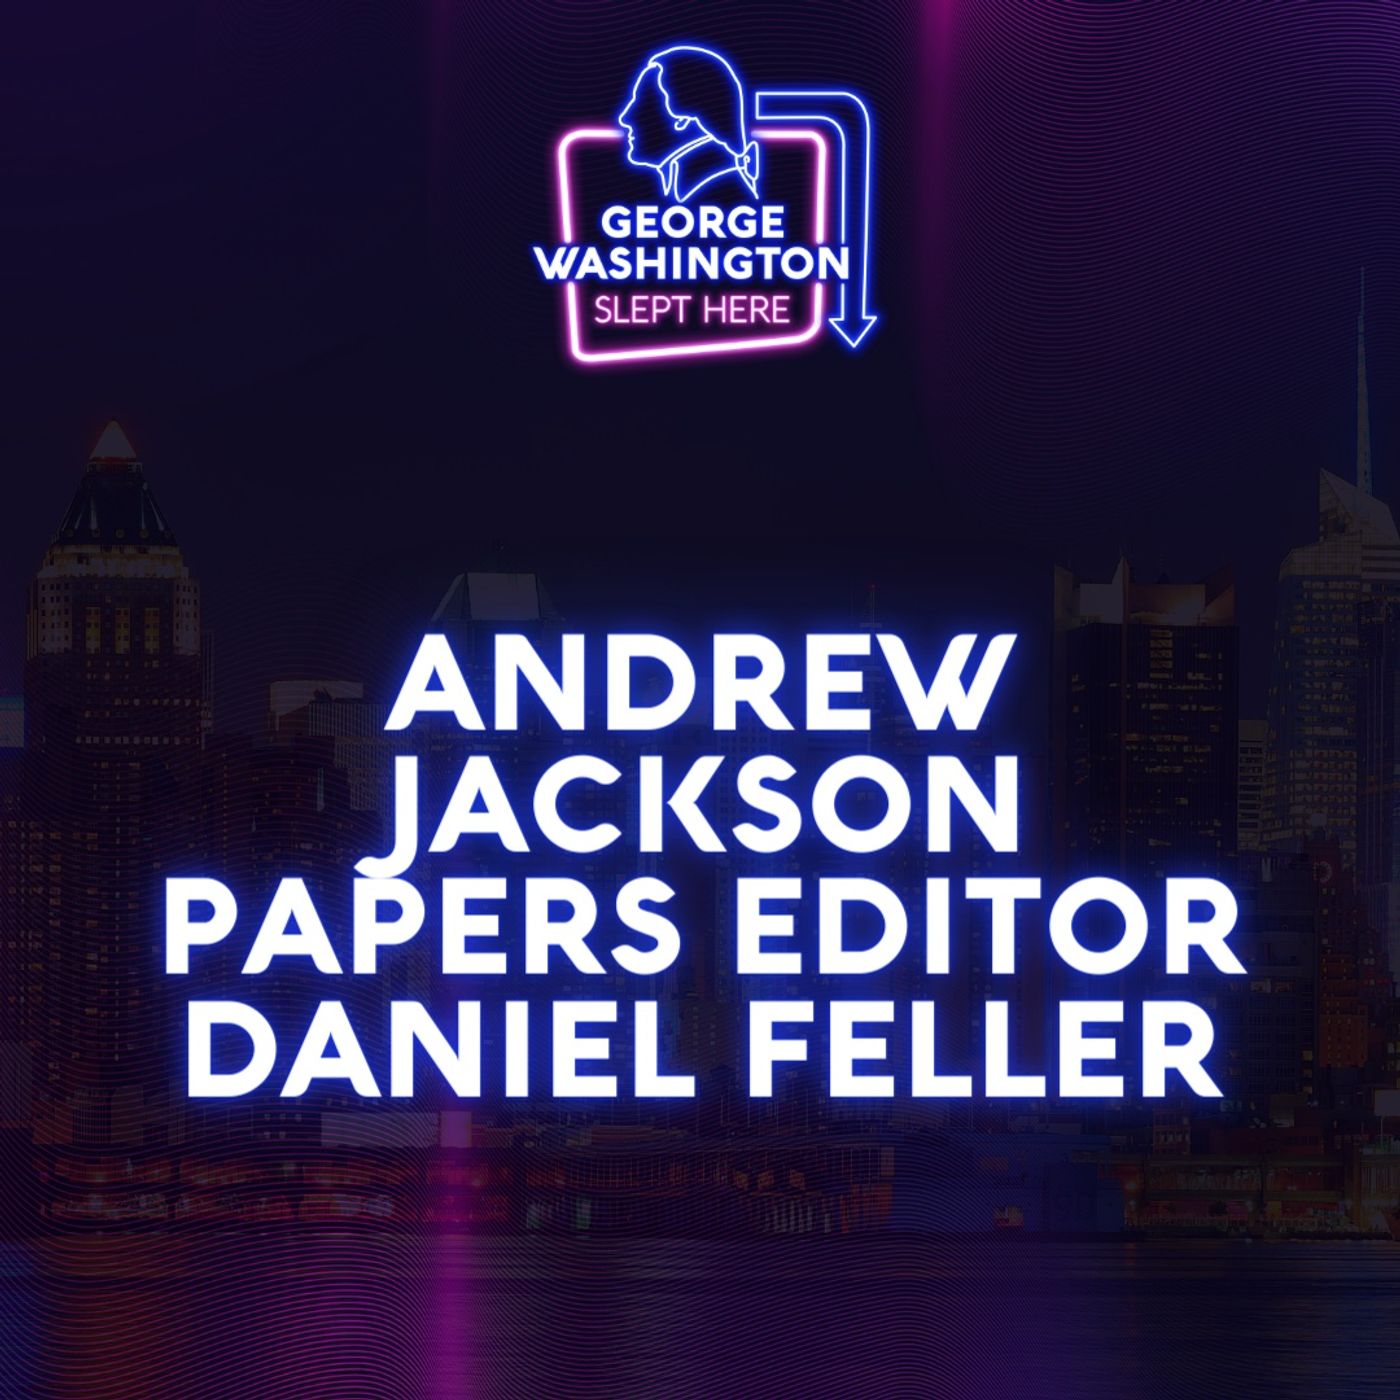 Andrew Jackson Papers Editor Daniel Feller